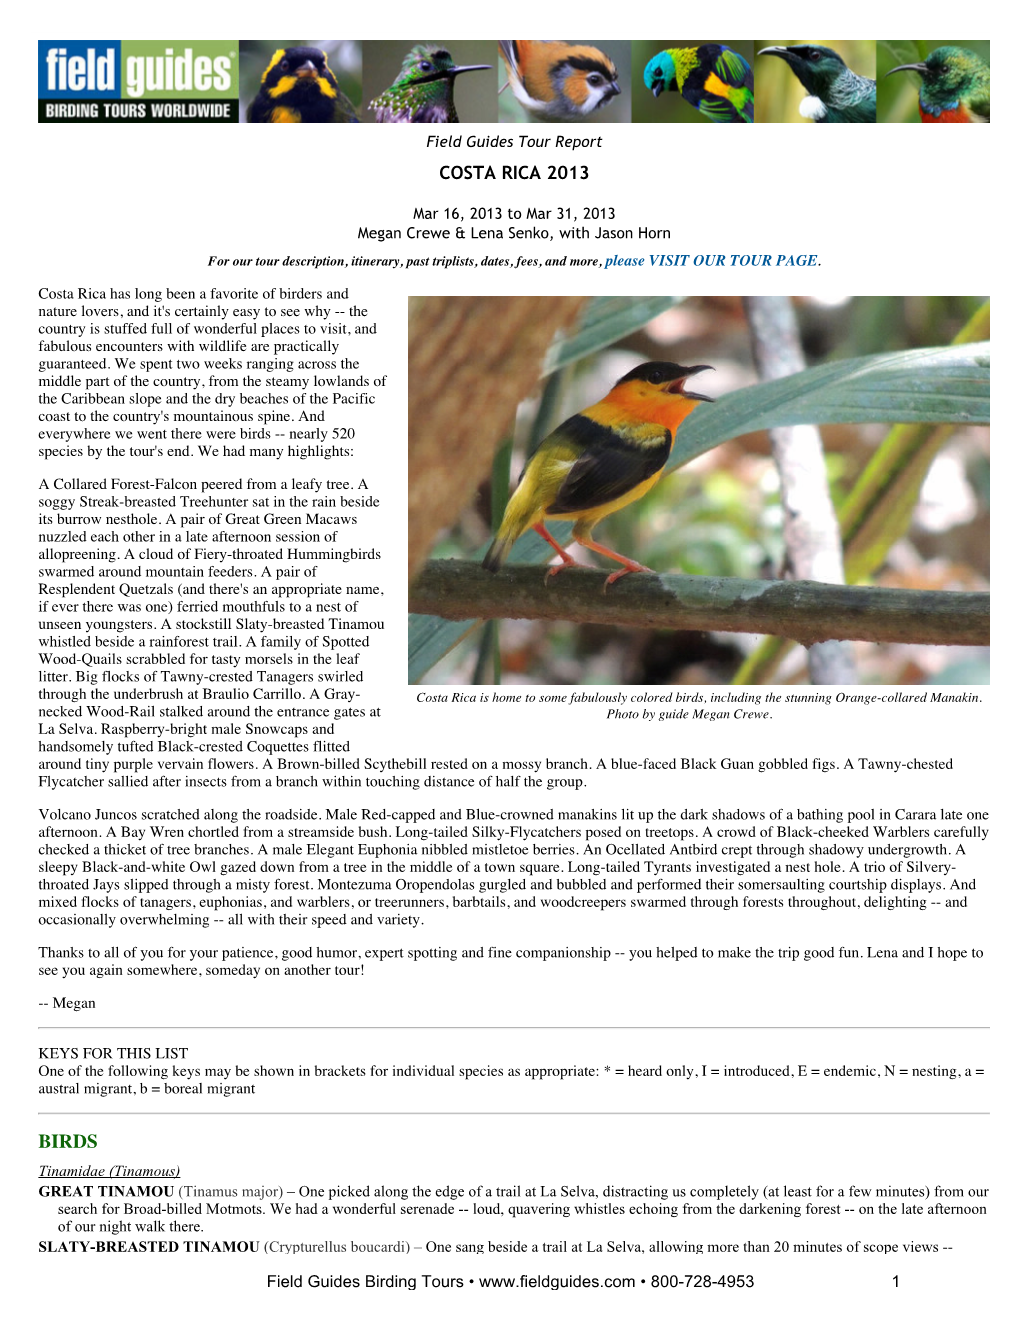 Field Guides Birding Tours: Costa Rica 2013